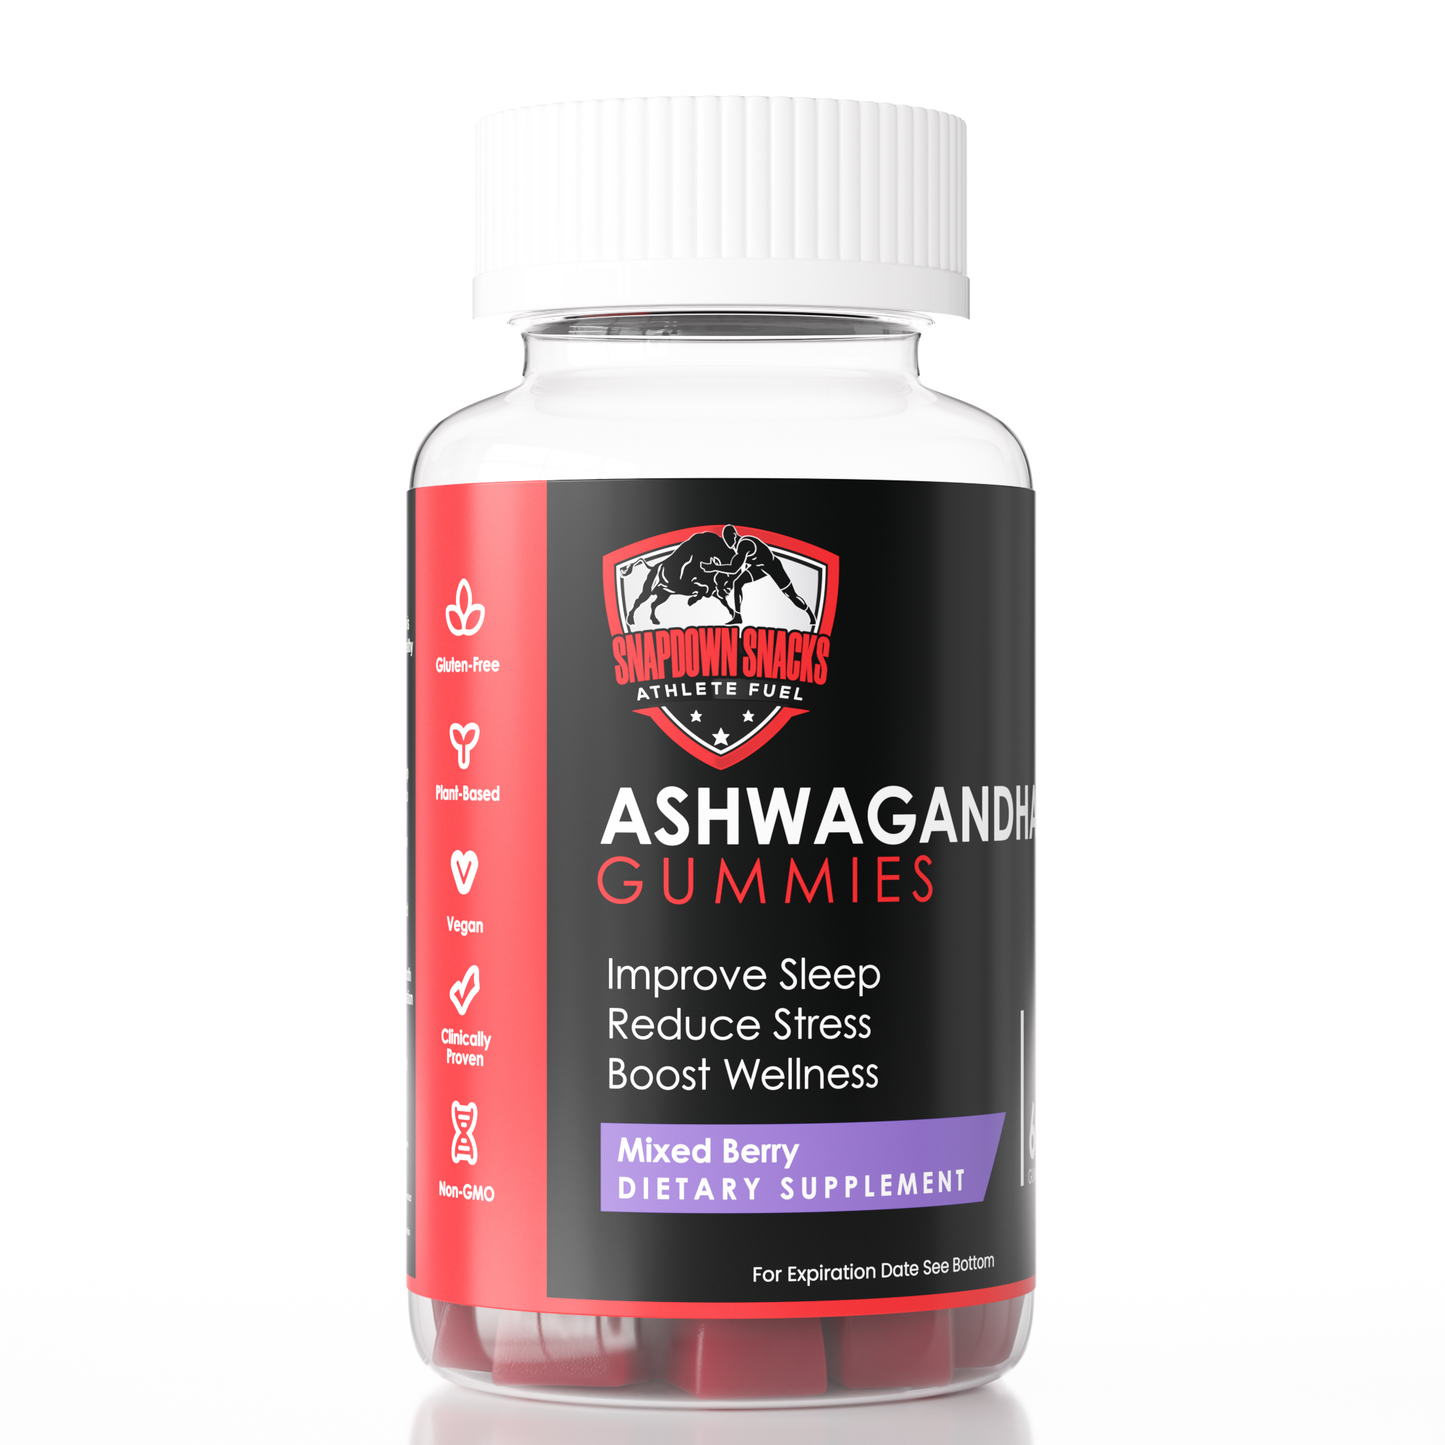 Snapdown Supplement - Ashwagandha gummies